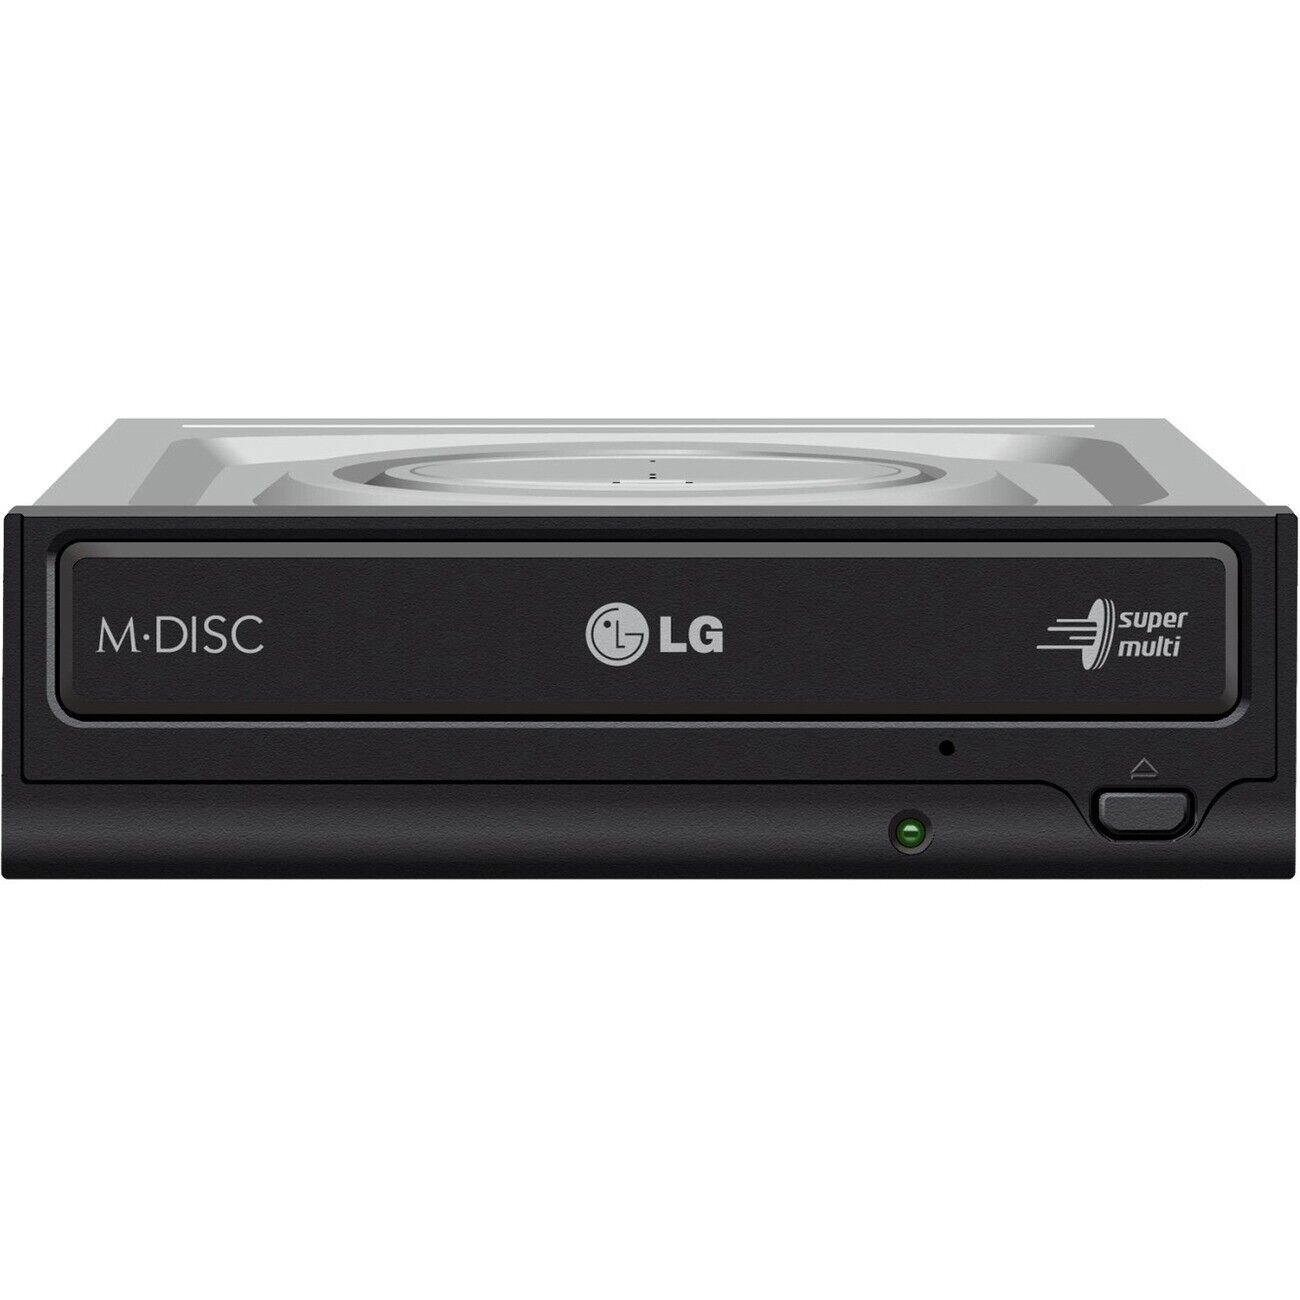 LG GH24NSC0 DVD-Writer - Retail Pack - Black (gh24nsc0ravar10b)